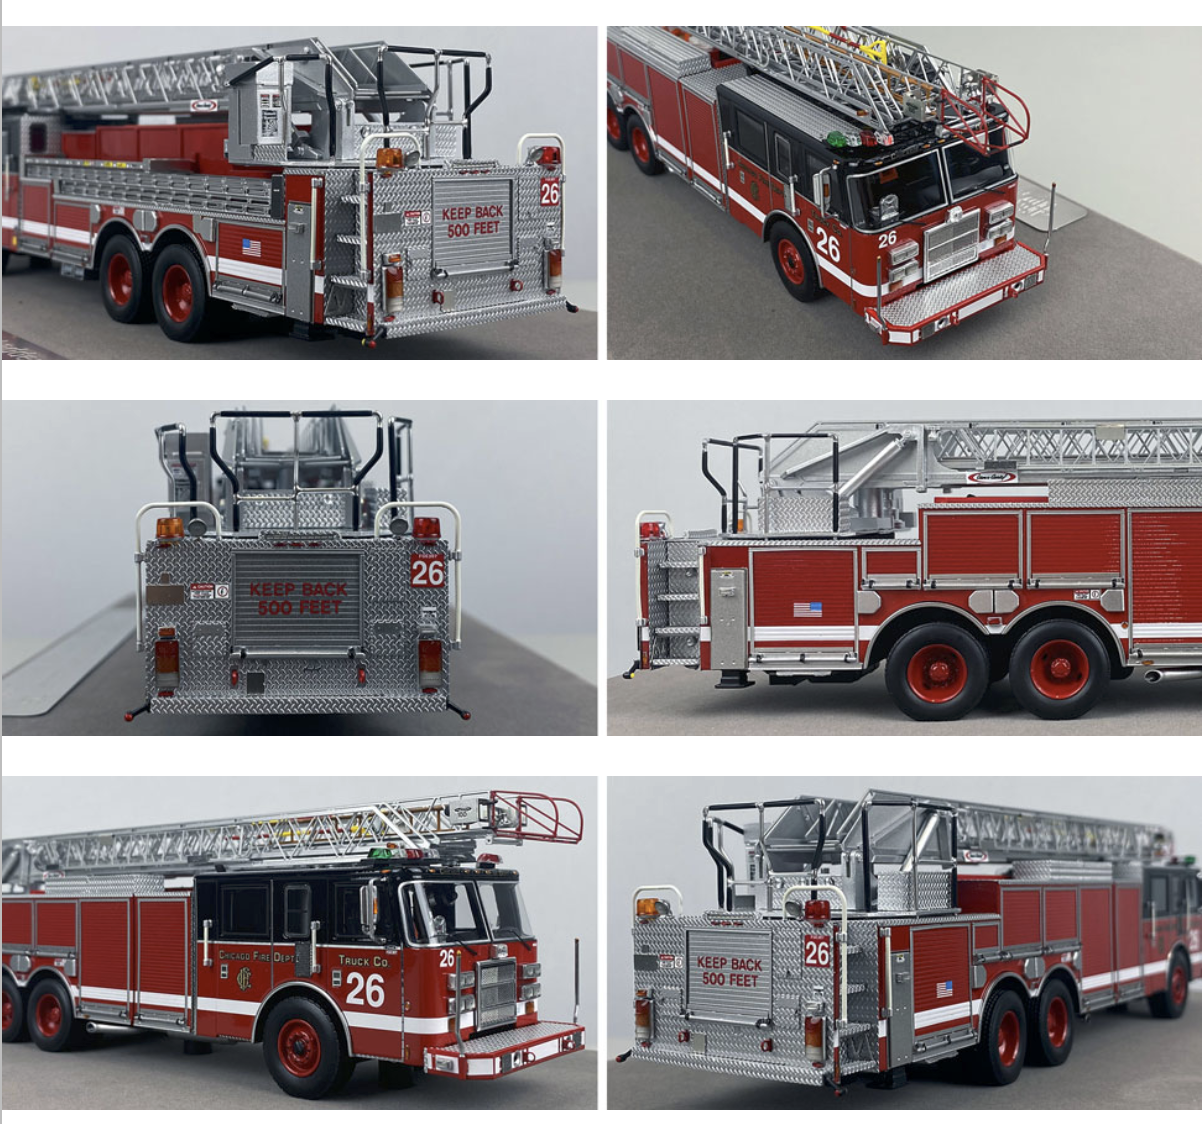 Fire Replicas model of Chicago FD Truck 26 Pierce Dash